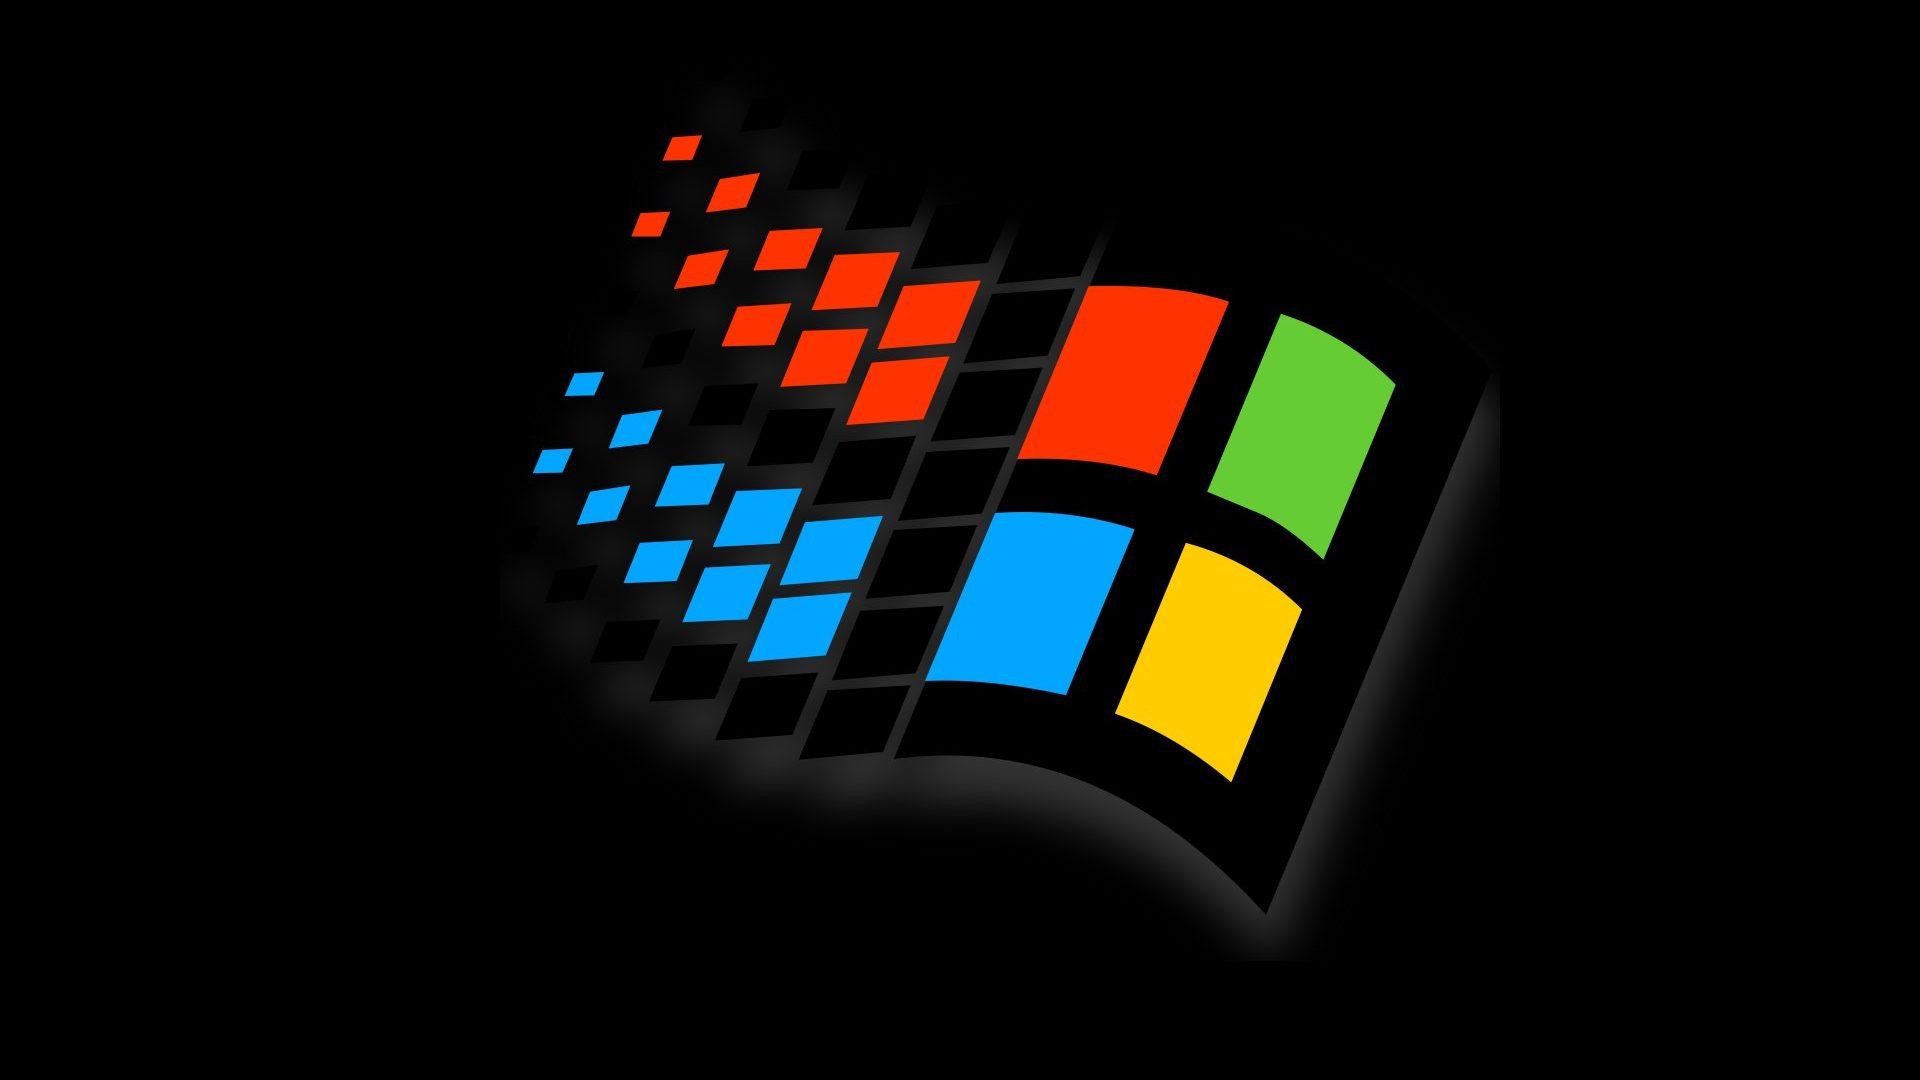 Windows 98 Logo - HD Windows 98 Logo Wallpaper | PaperPull